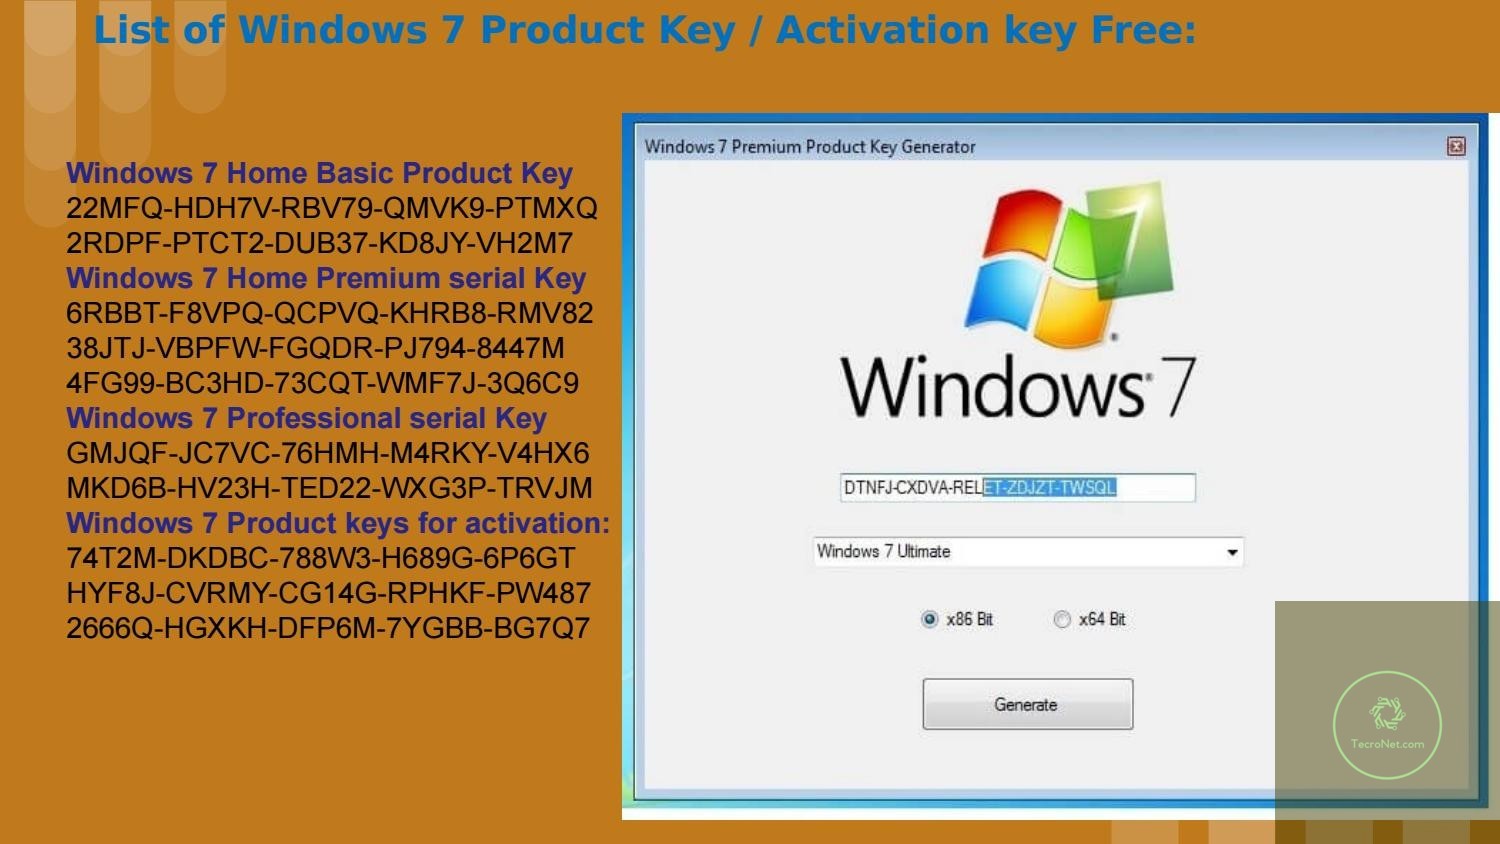 Windows 7 home basic product key generator windows 10